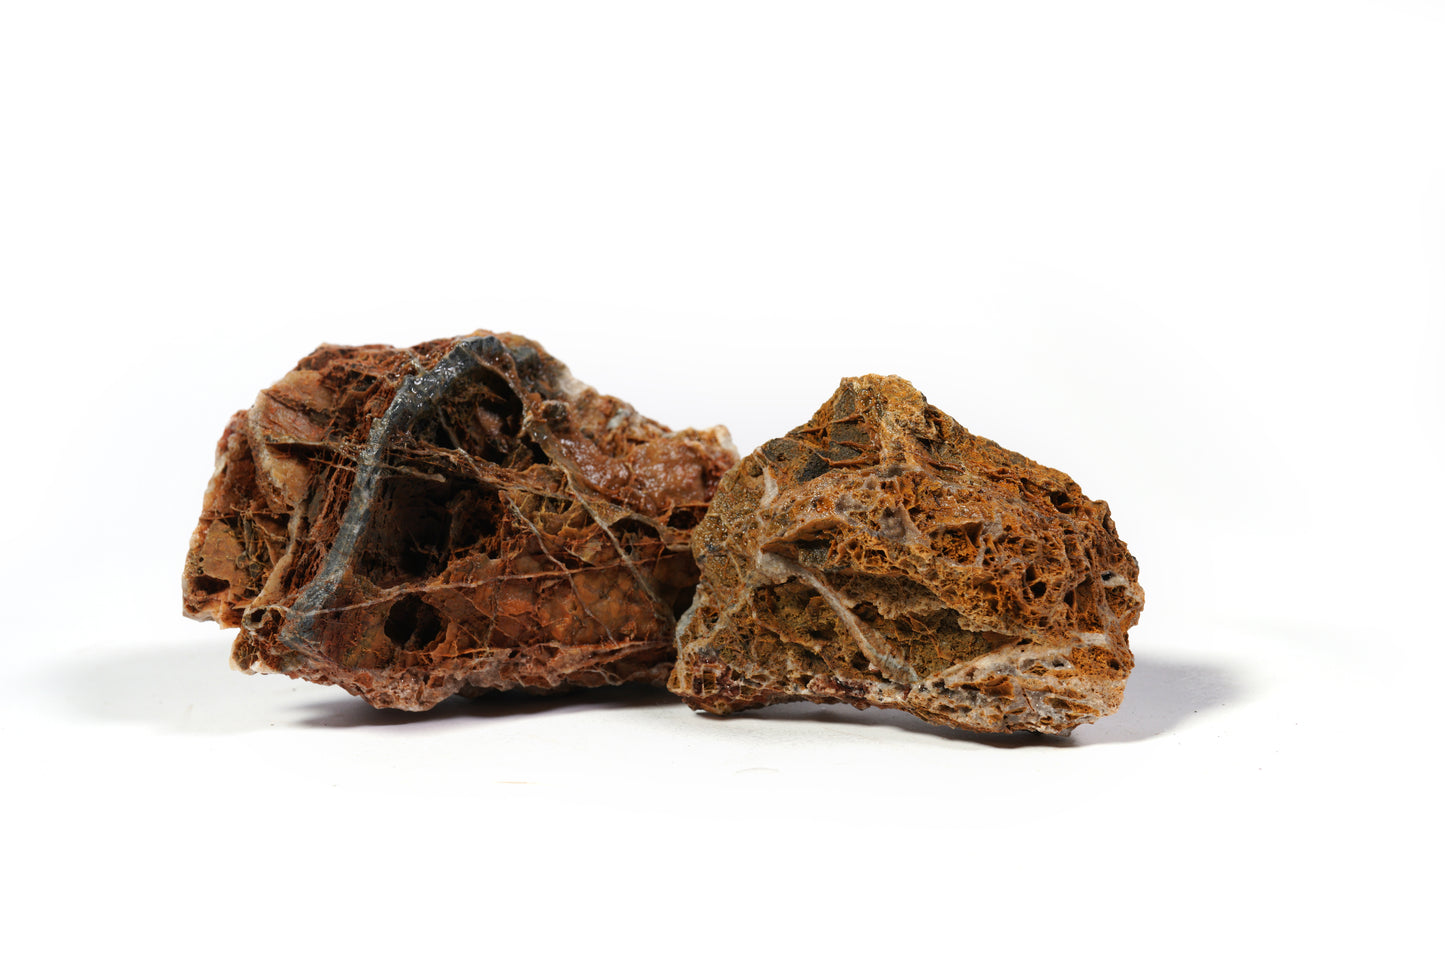 LANDEN Maple Leaves Stone Natural Rocks for Aquarium (18lbs,3-9 in) 9pcs